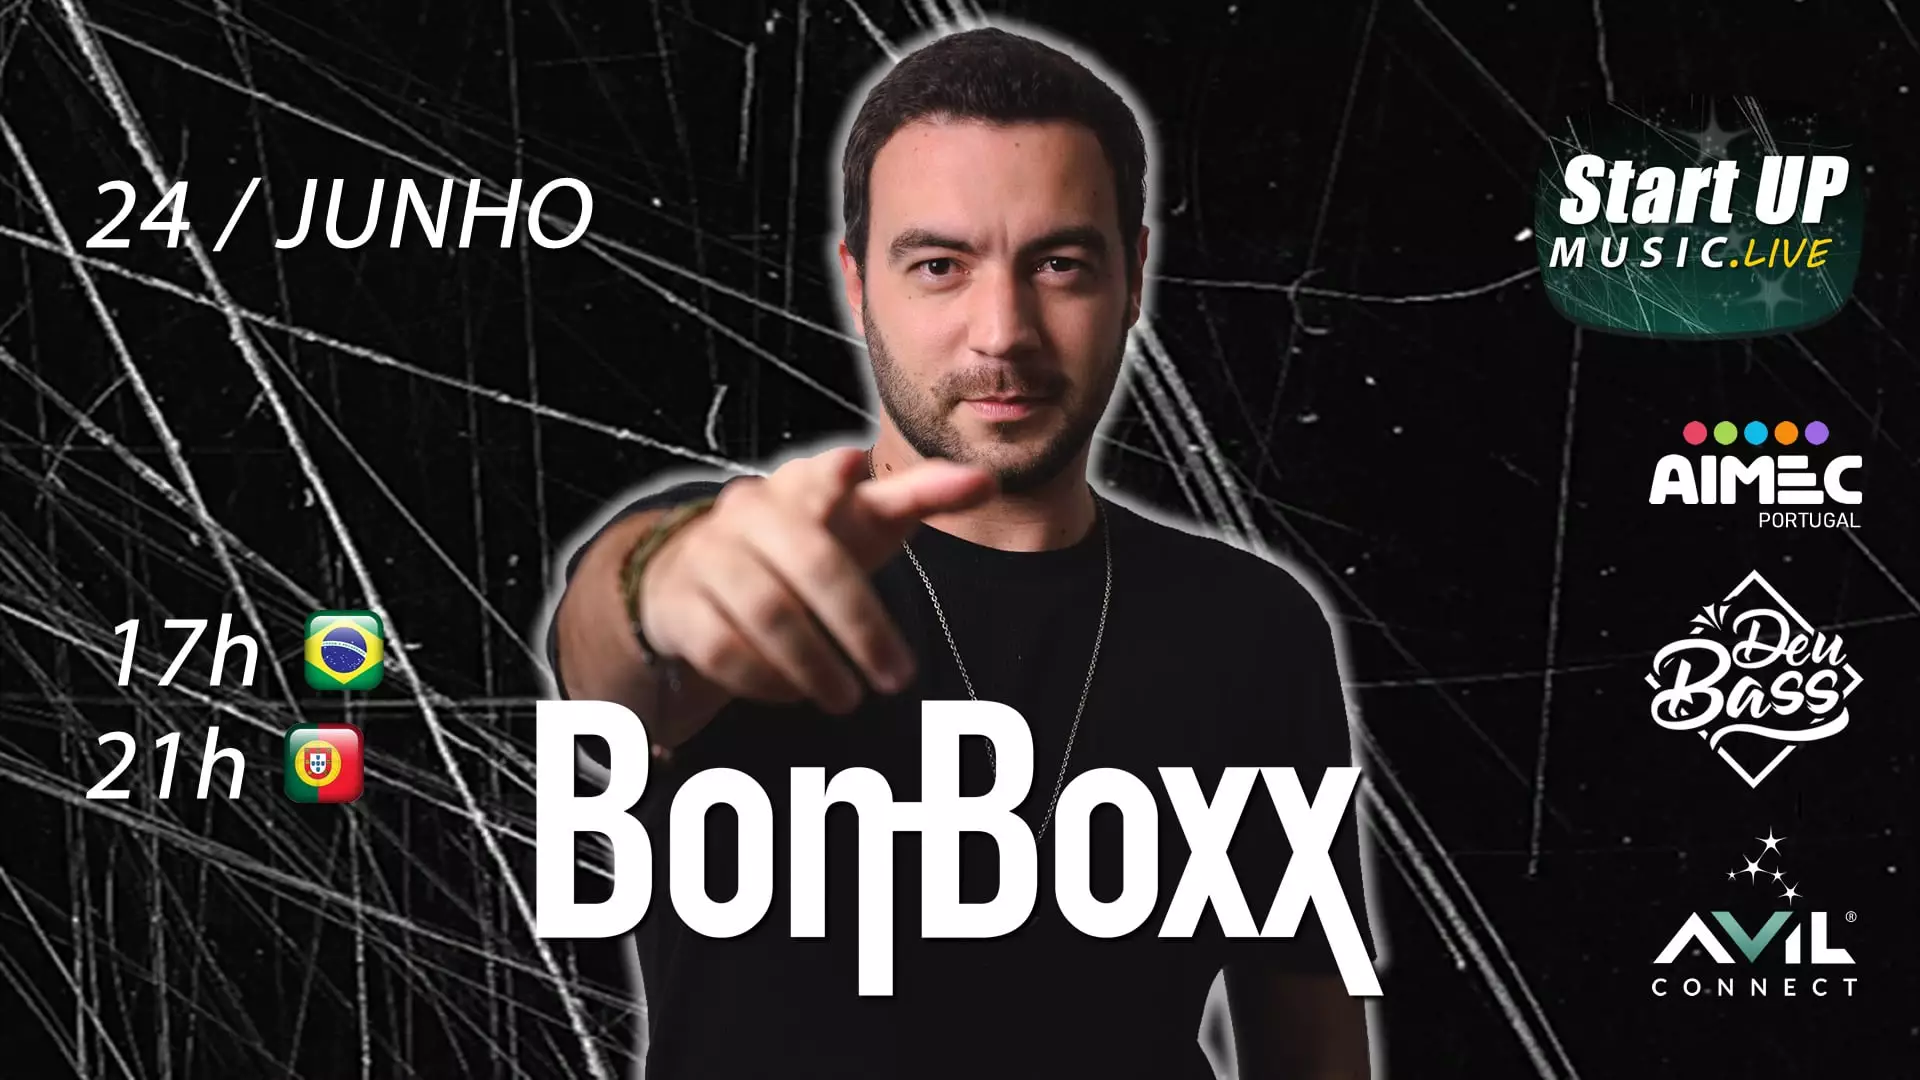 Startup Music Live DJ BonBoxx